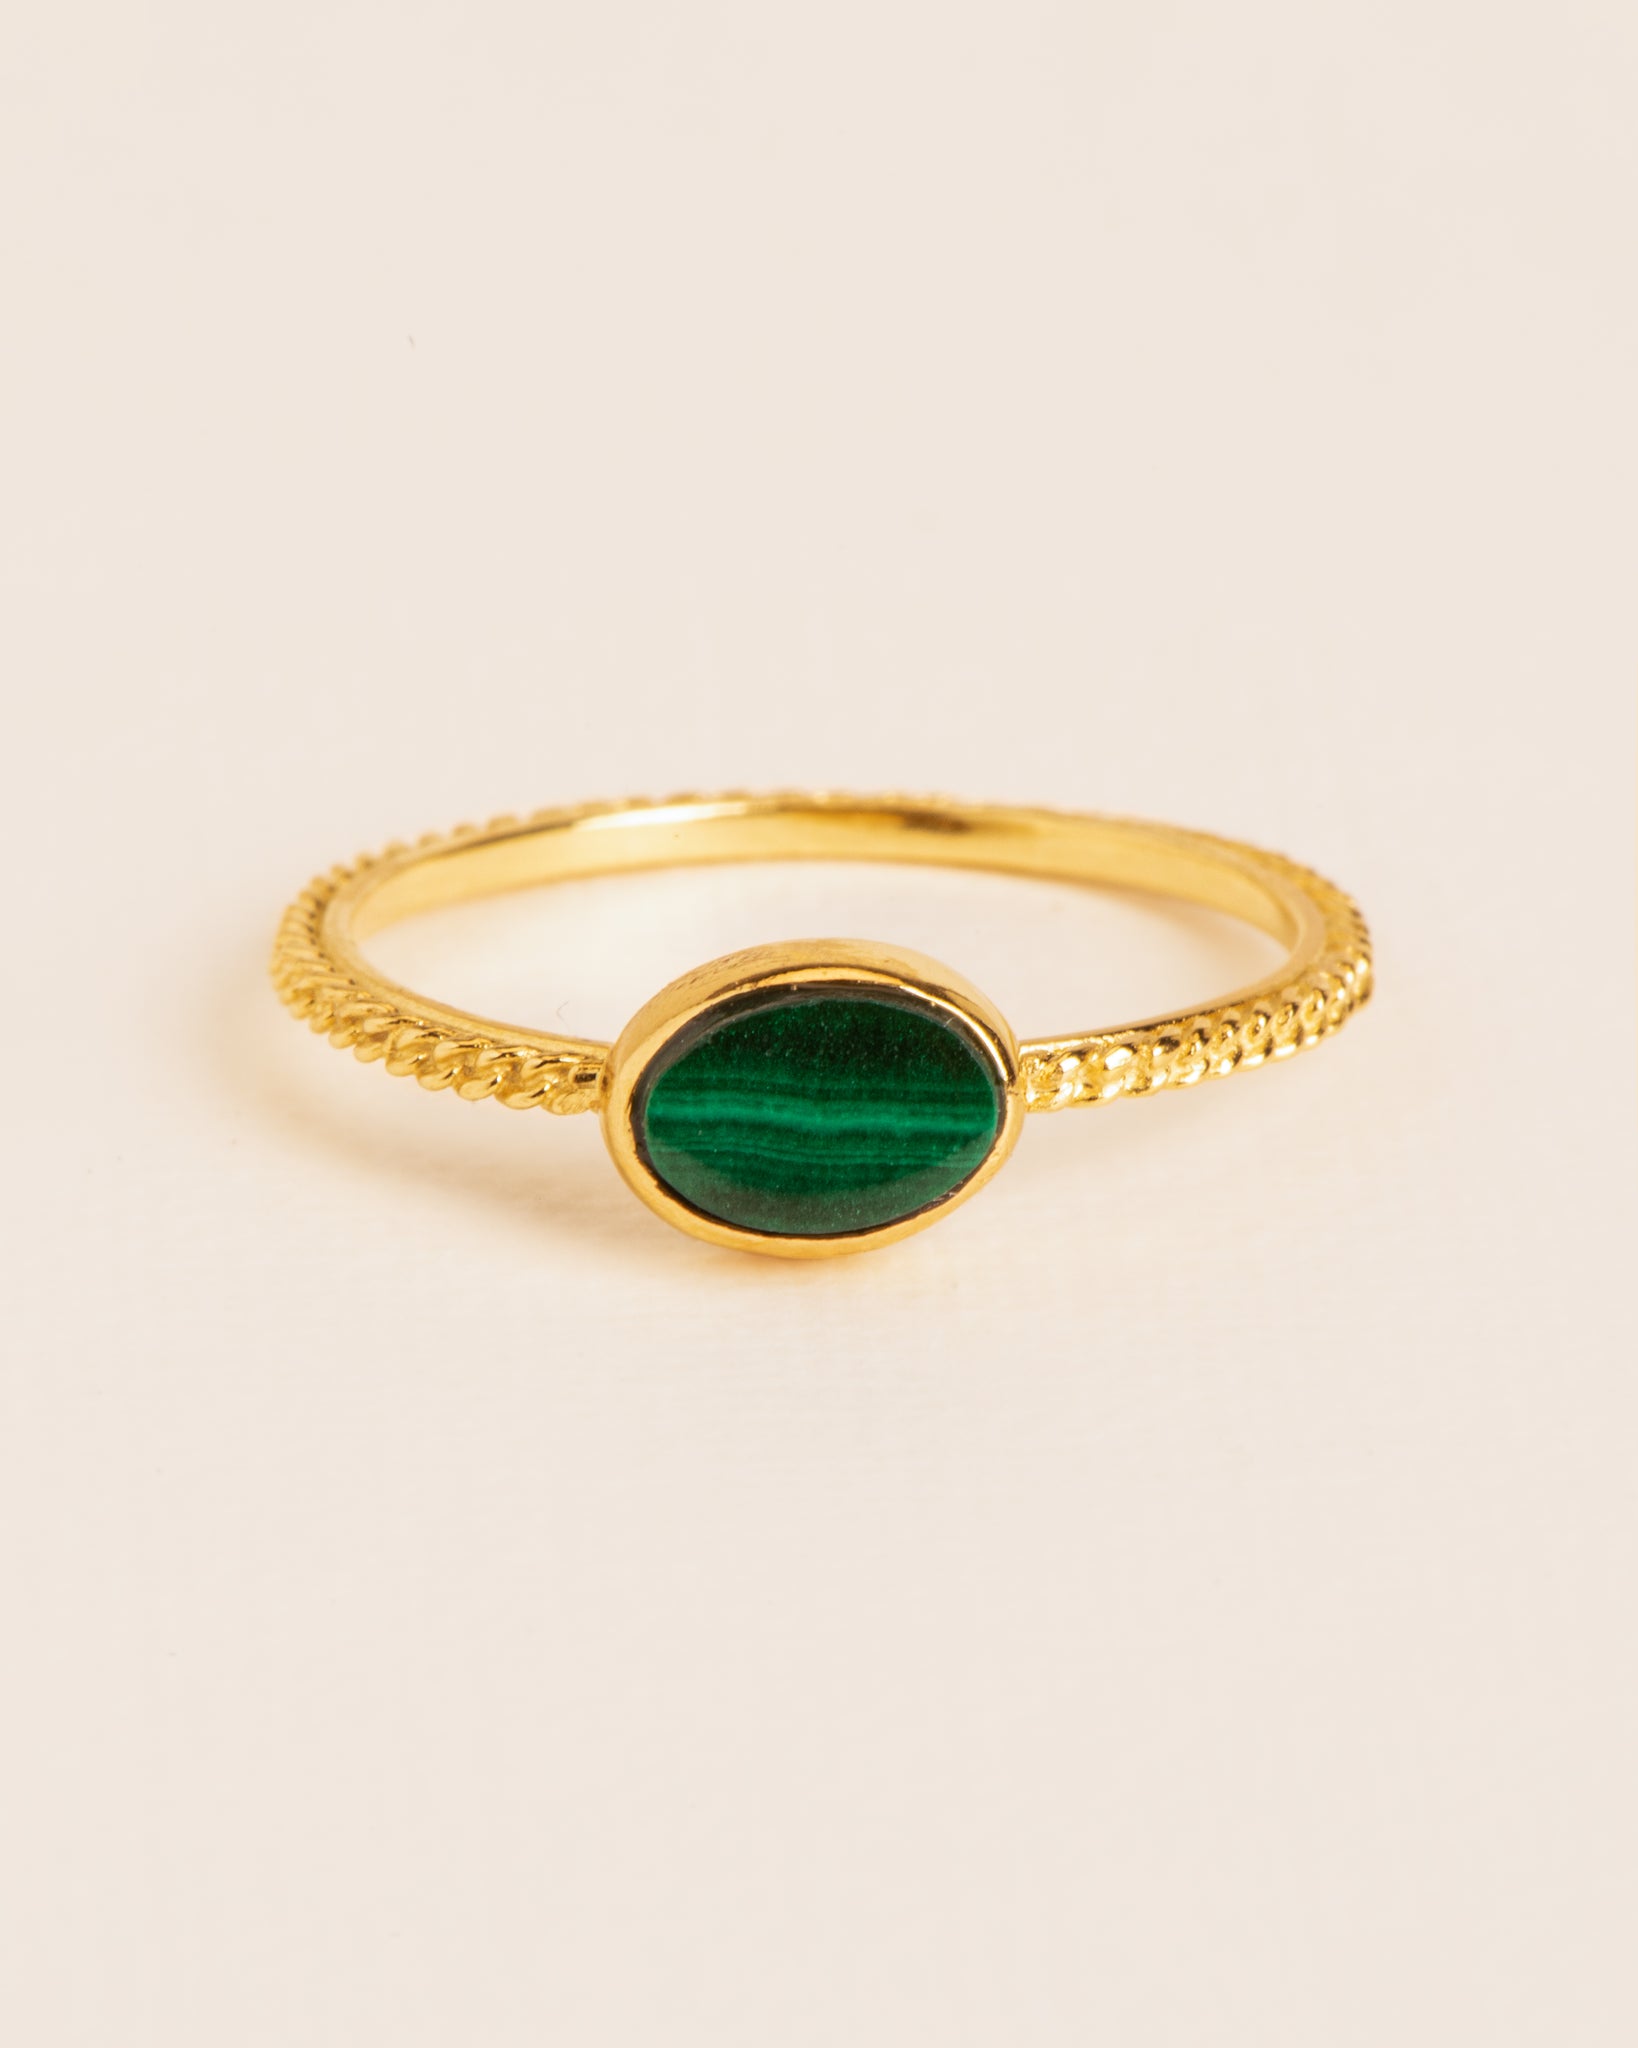 Malachite Trustone and Gold Ring | Patrick Adair Designs